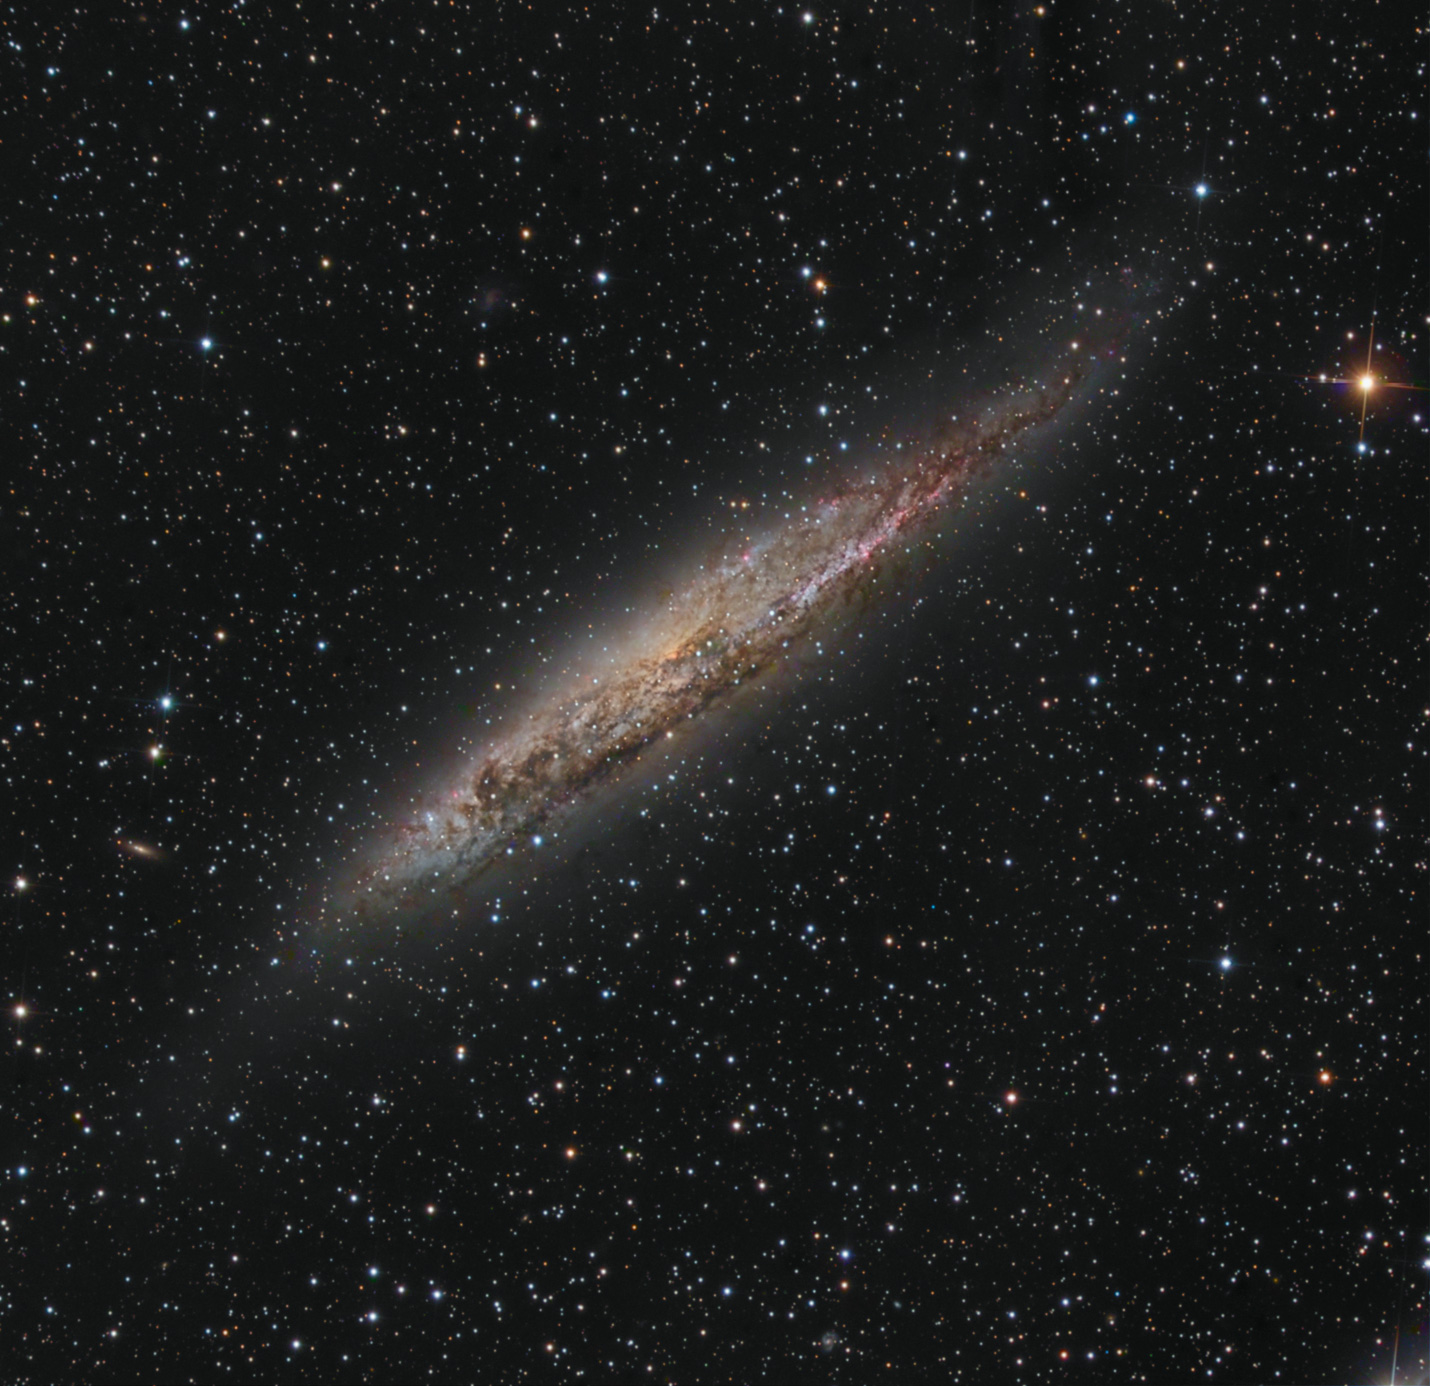 La proche galaxie spirale NGC 4945